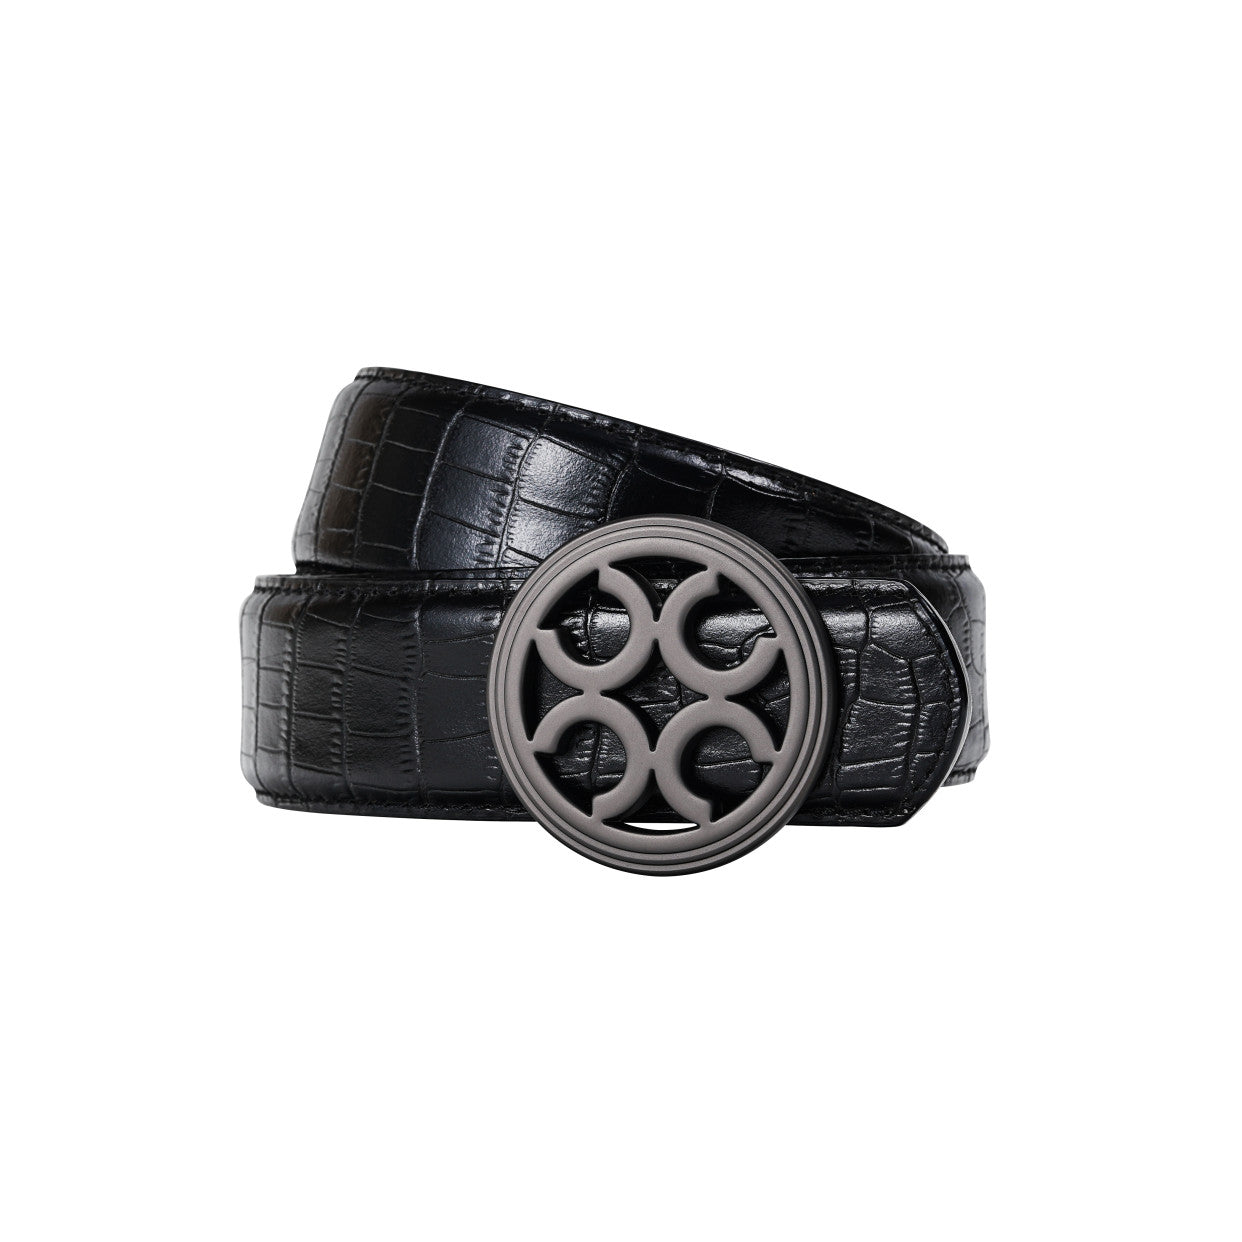 Leather belt - Black Croc - Orange Cube